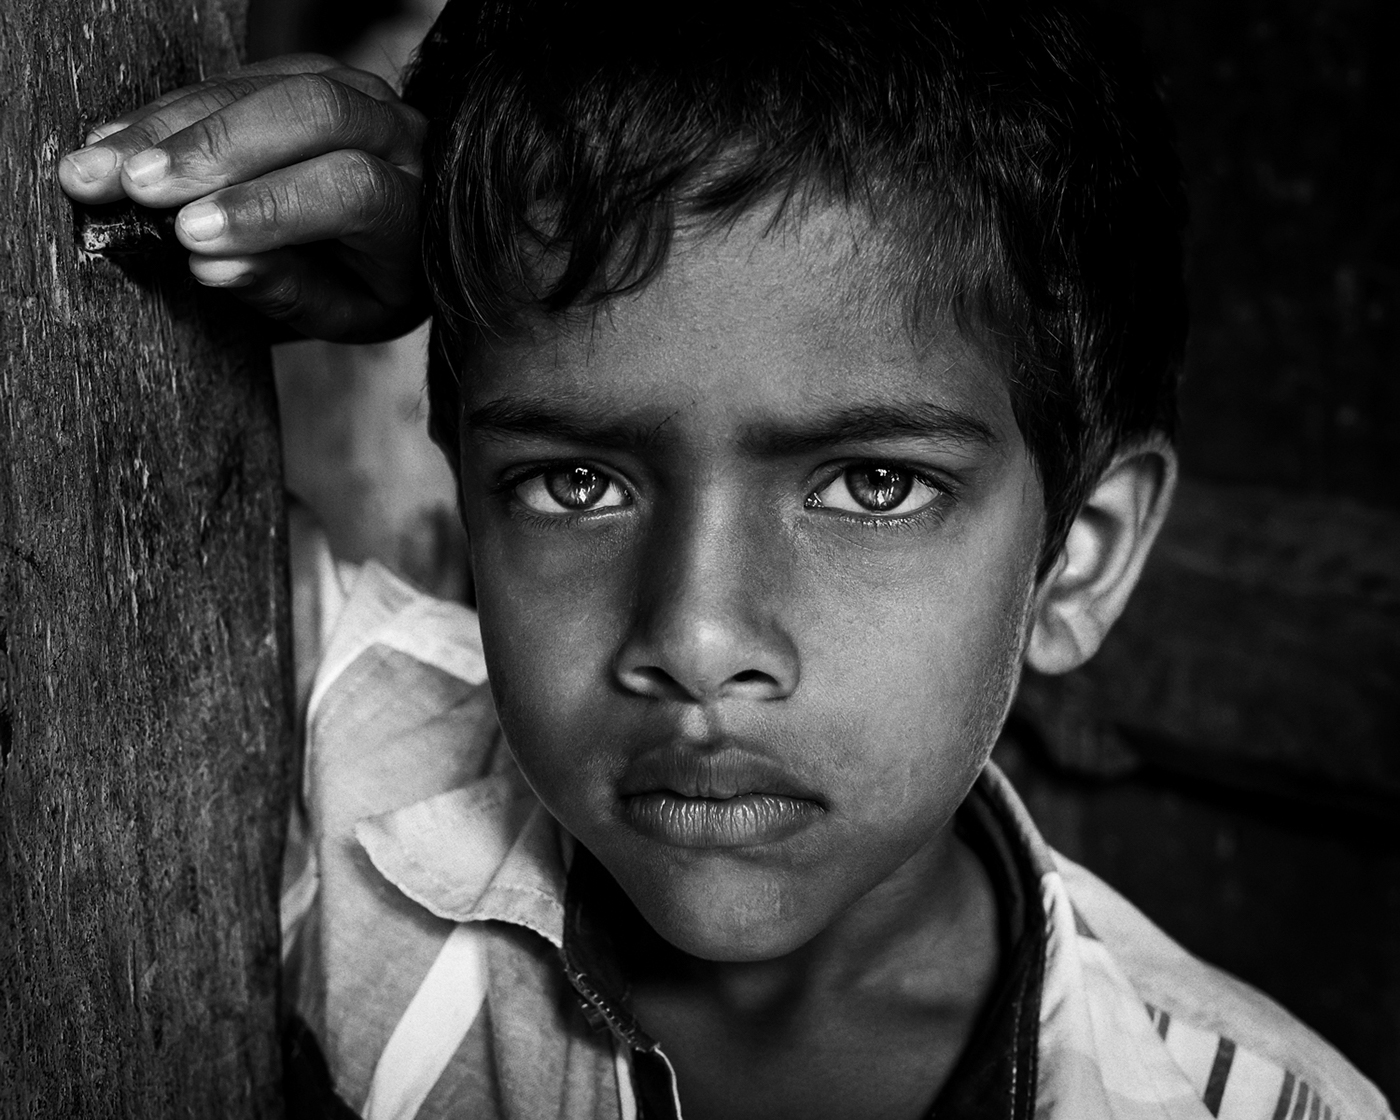 portraits kids India eyes closeup